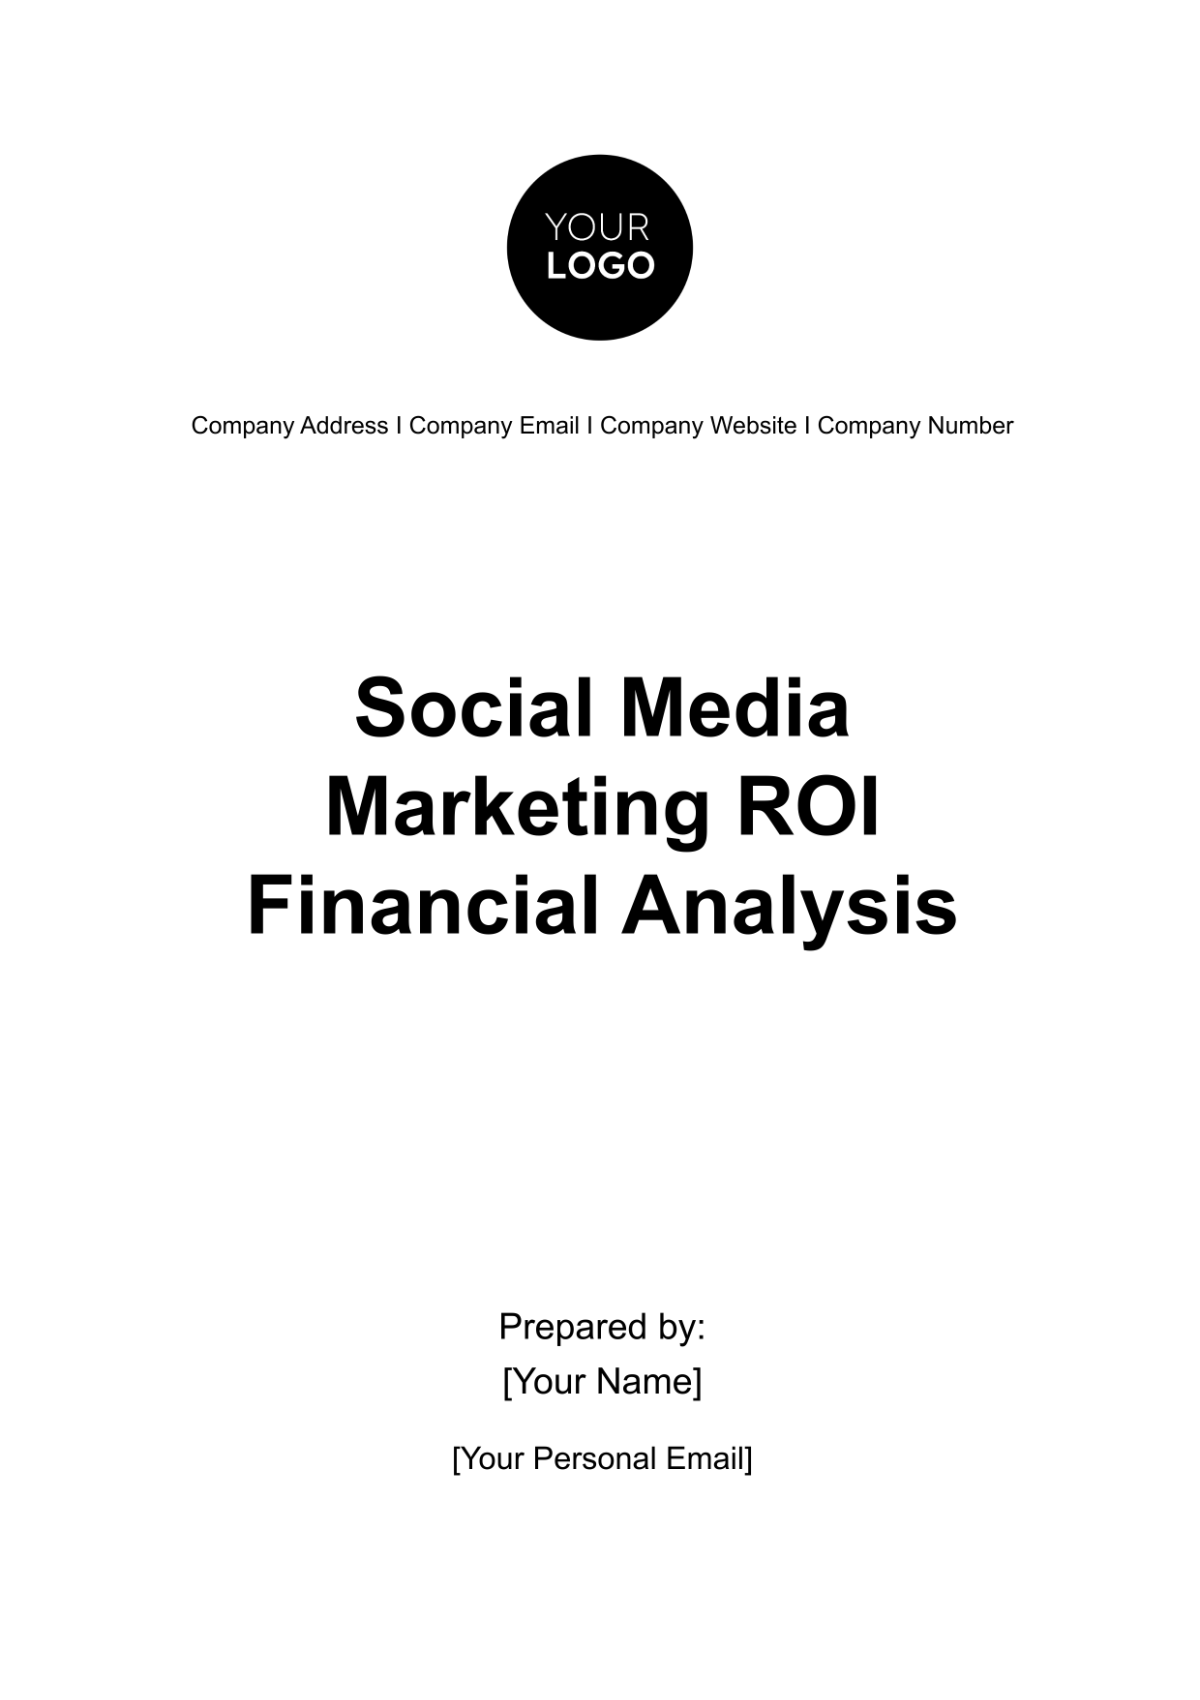 Social Media Marketing ROI Financial Analysis Template